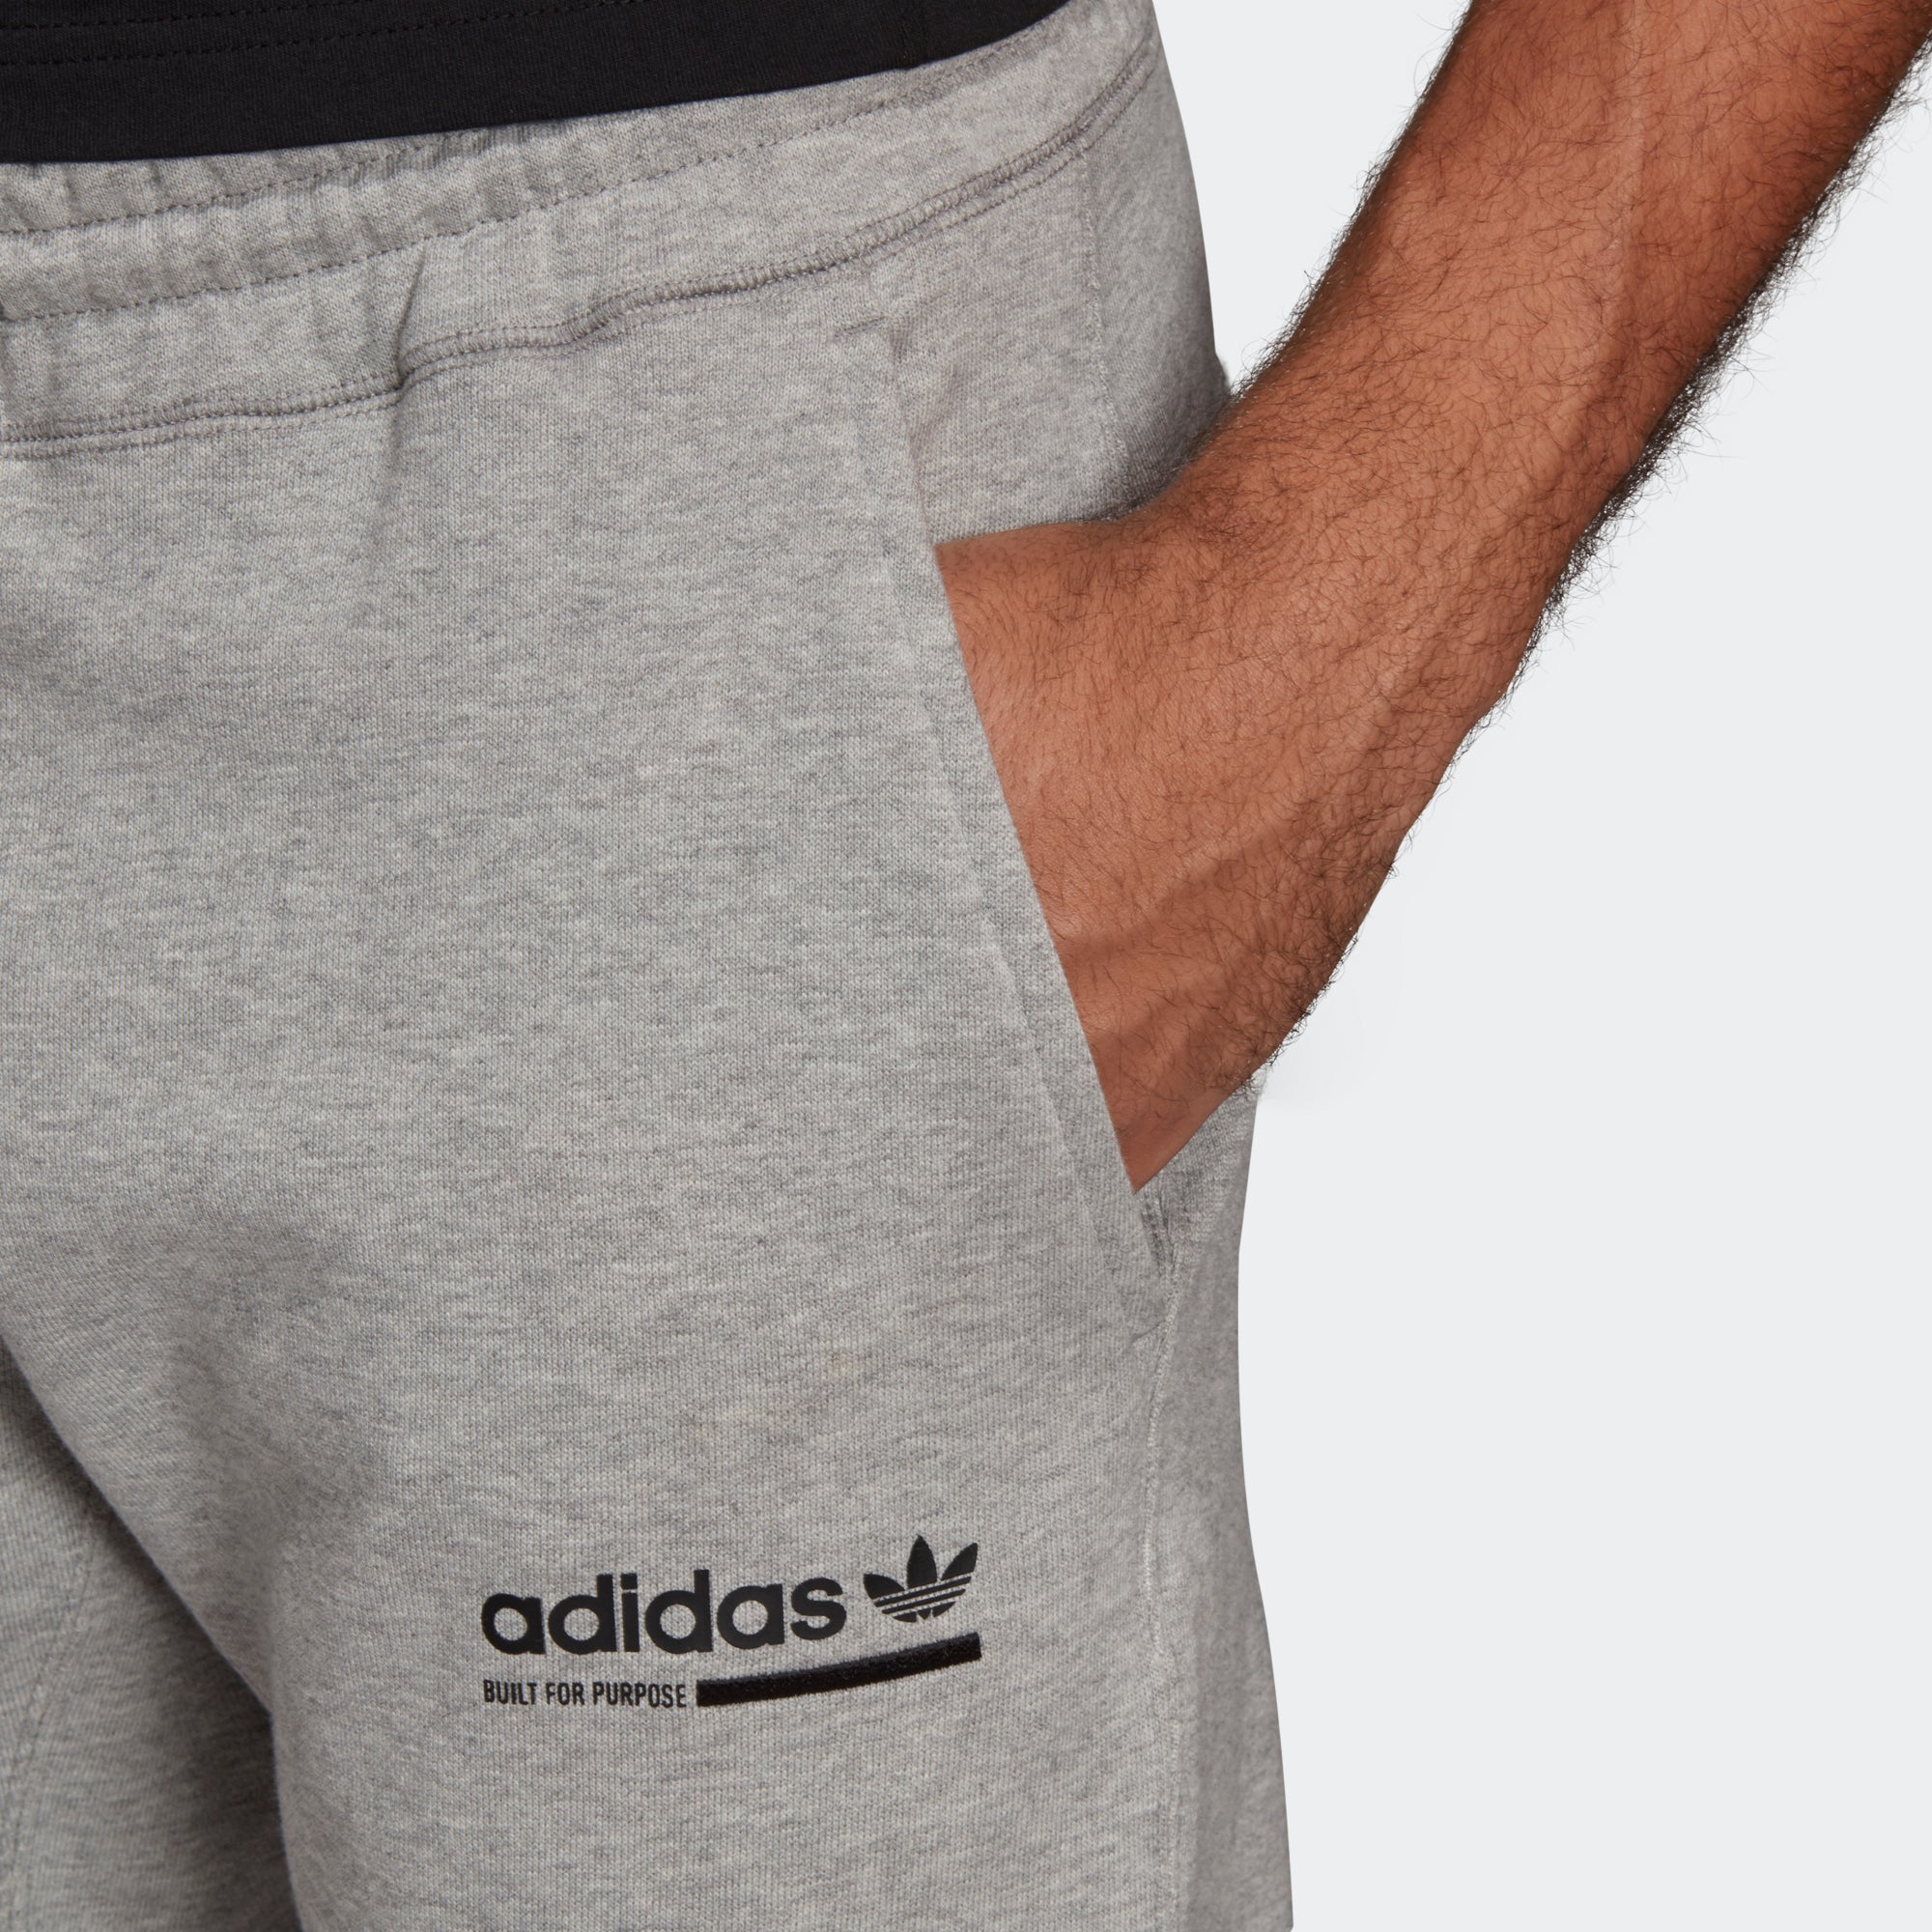 Buy > men's gray adidas sweatpants > in stock